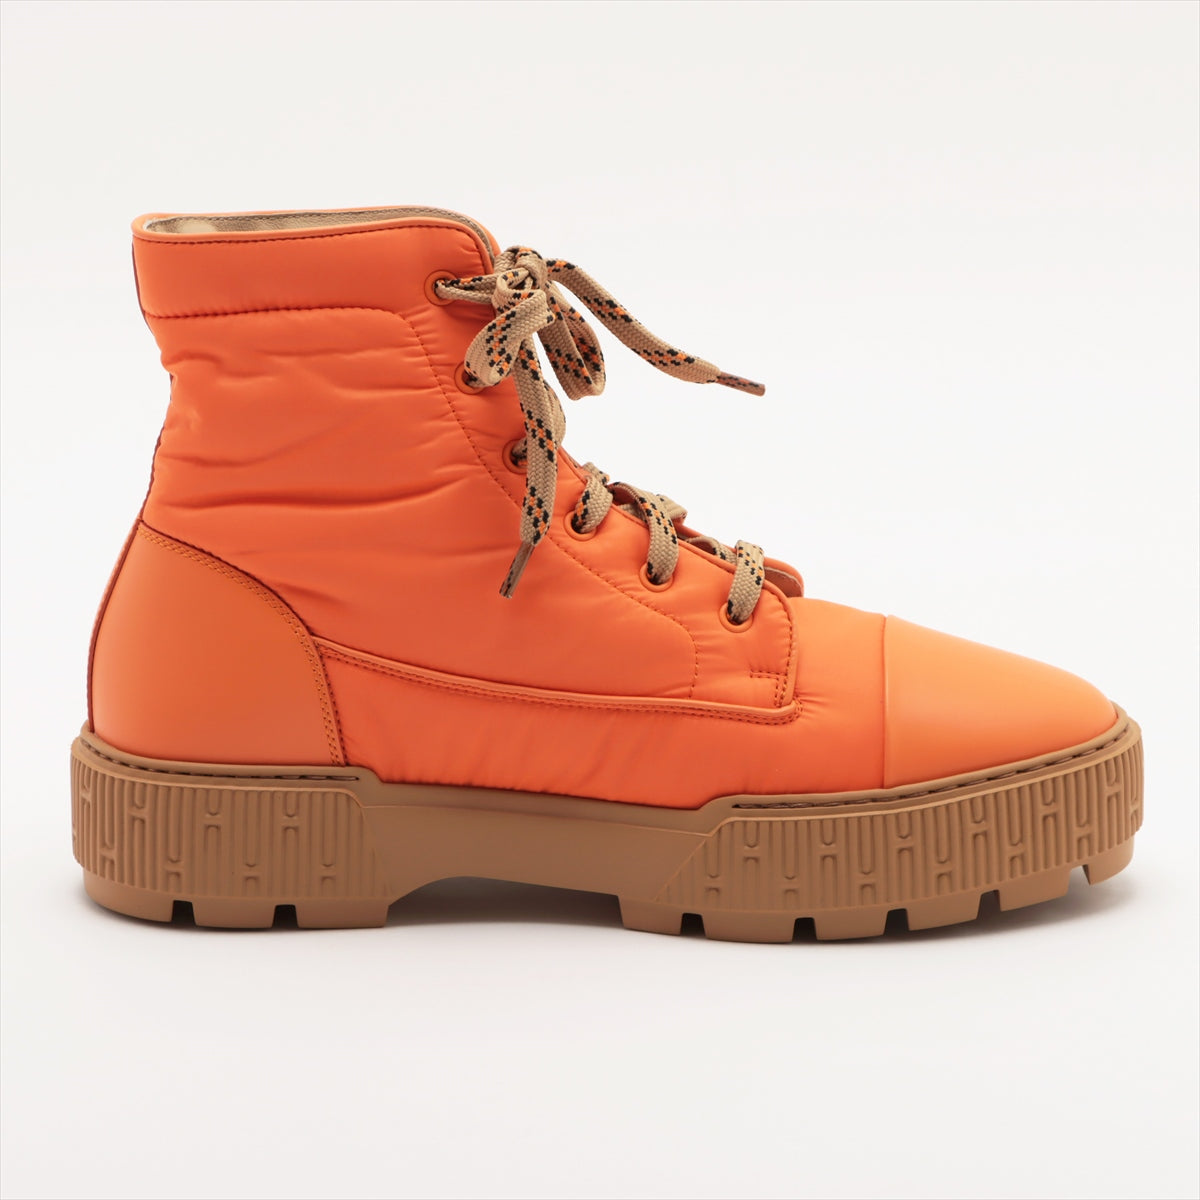 Hermès fresh Nylon & Leather Boots 42 Men's Beige x orange Replacement Laces Included